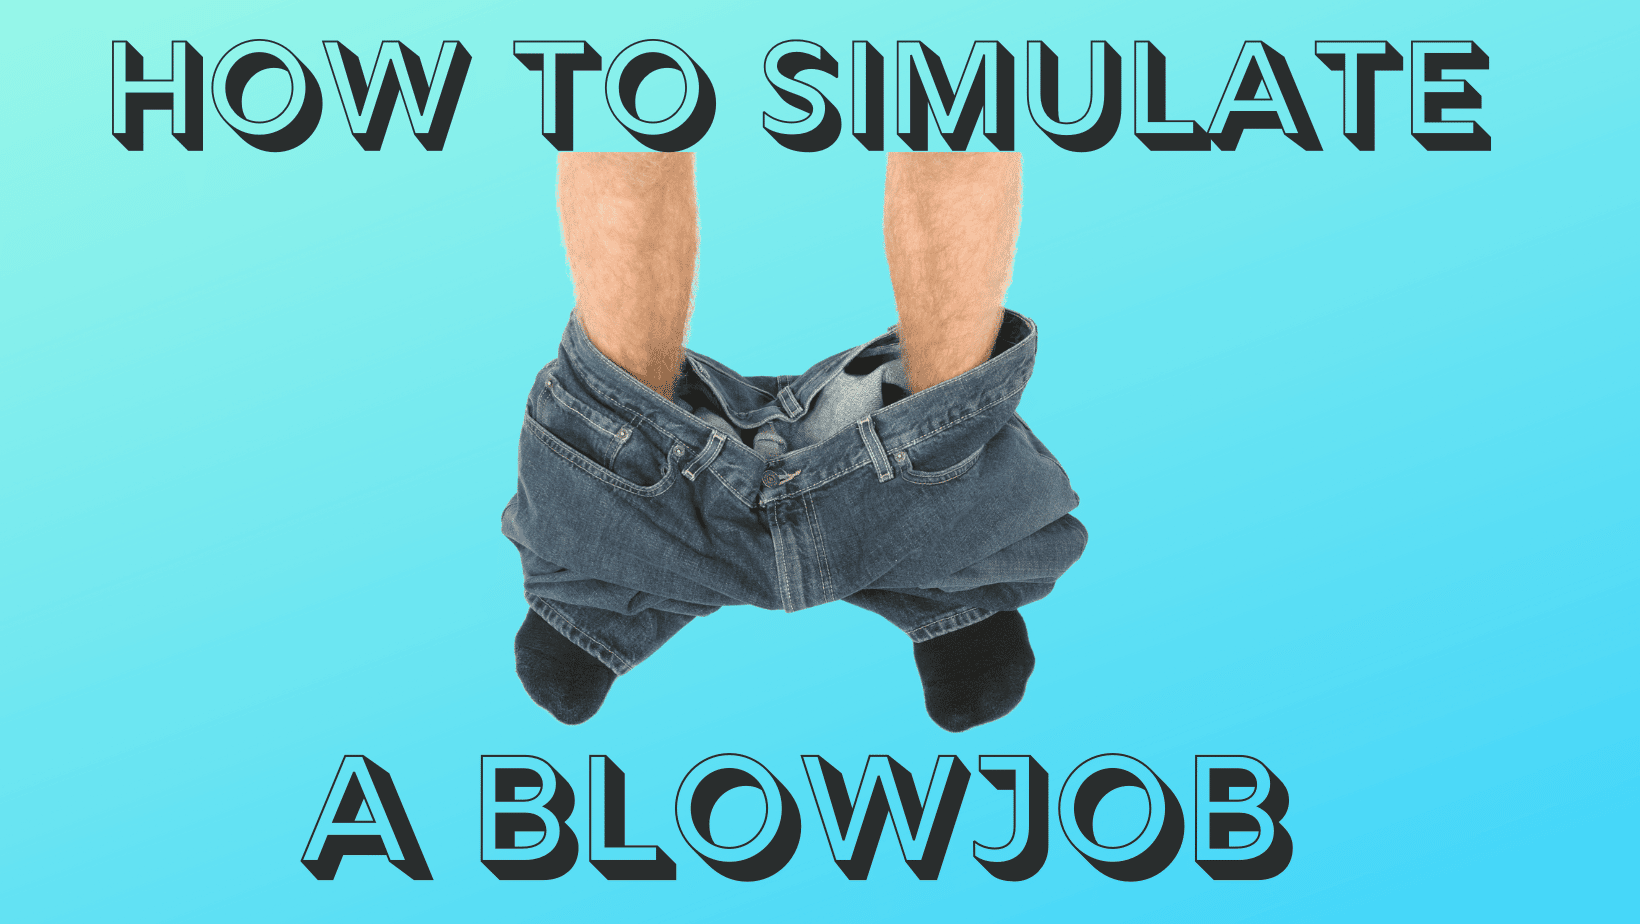 bob thebulldog recommends How To Make A Fake Blowjob